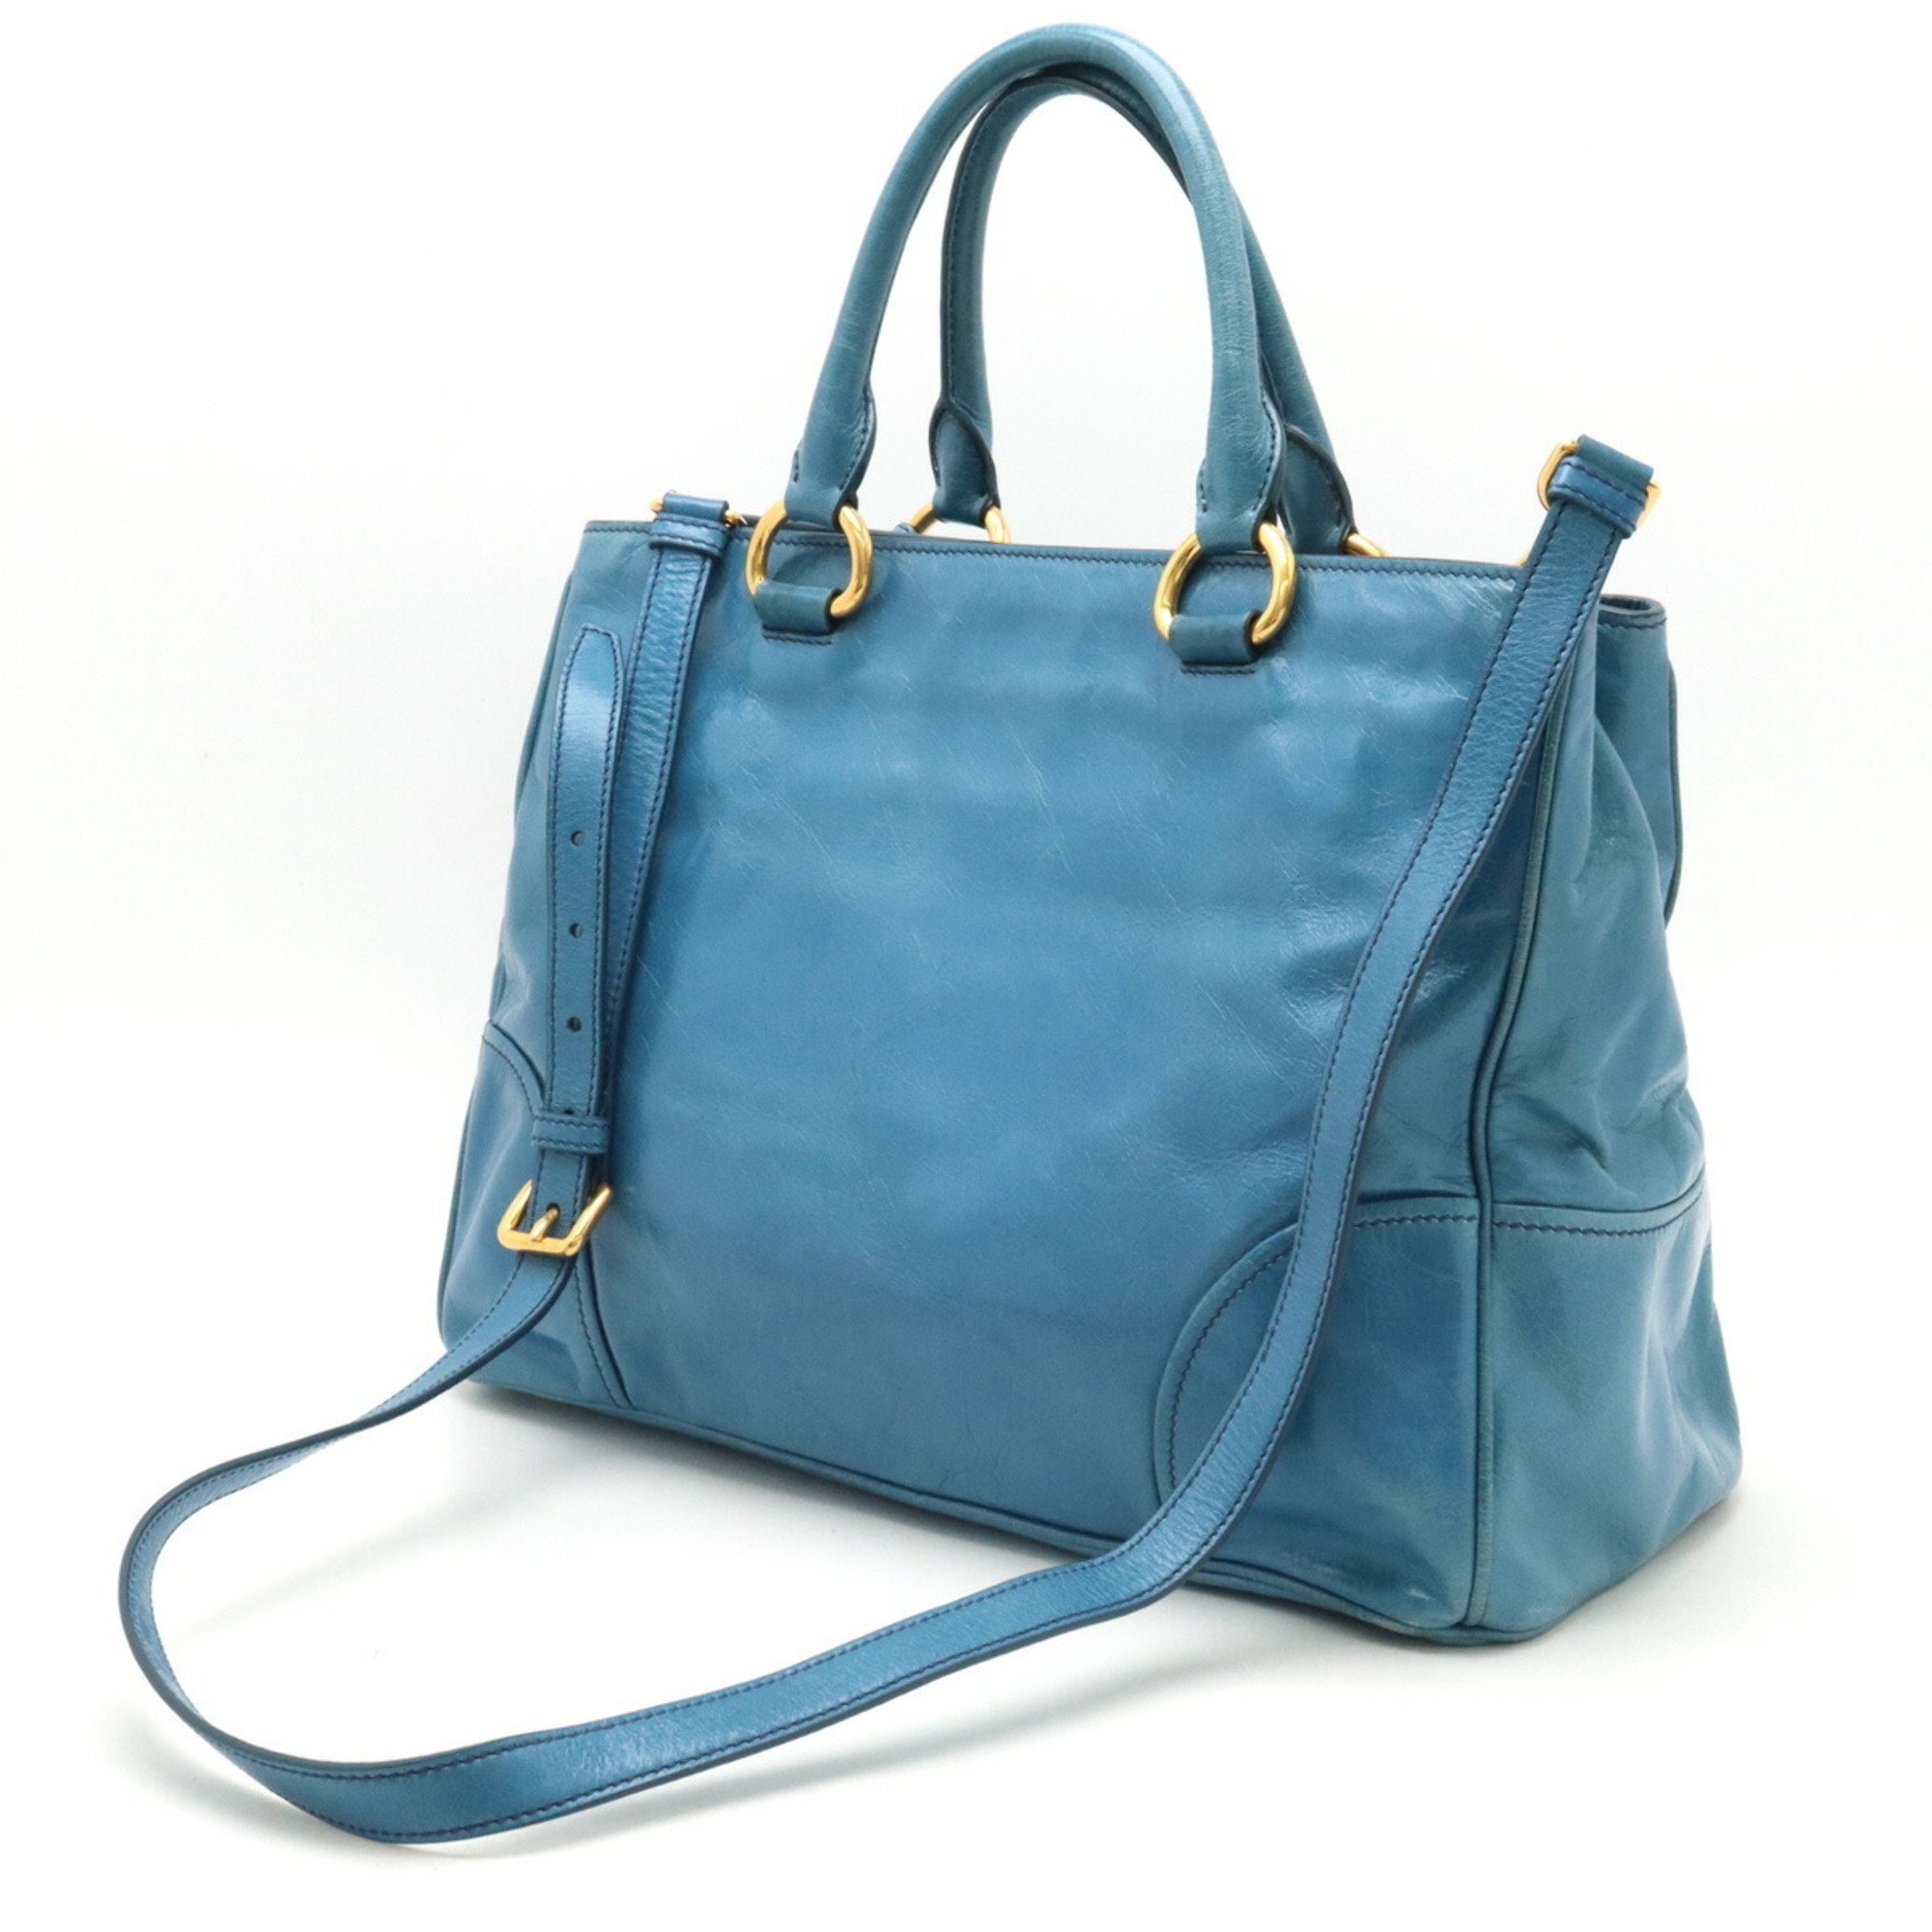 Miu Miu Miu VITELLO SHINE handbag shoulder bag leather OCEANO blue purchased from Japanese outlet RN1092